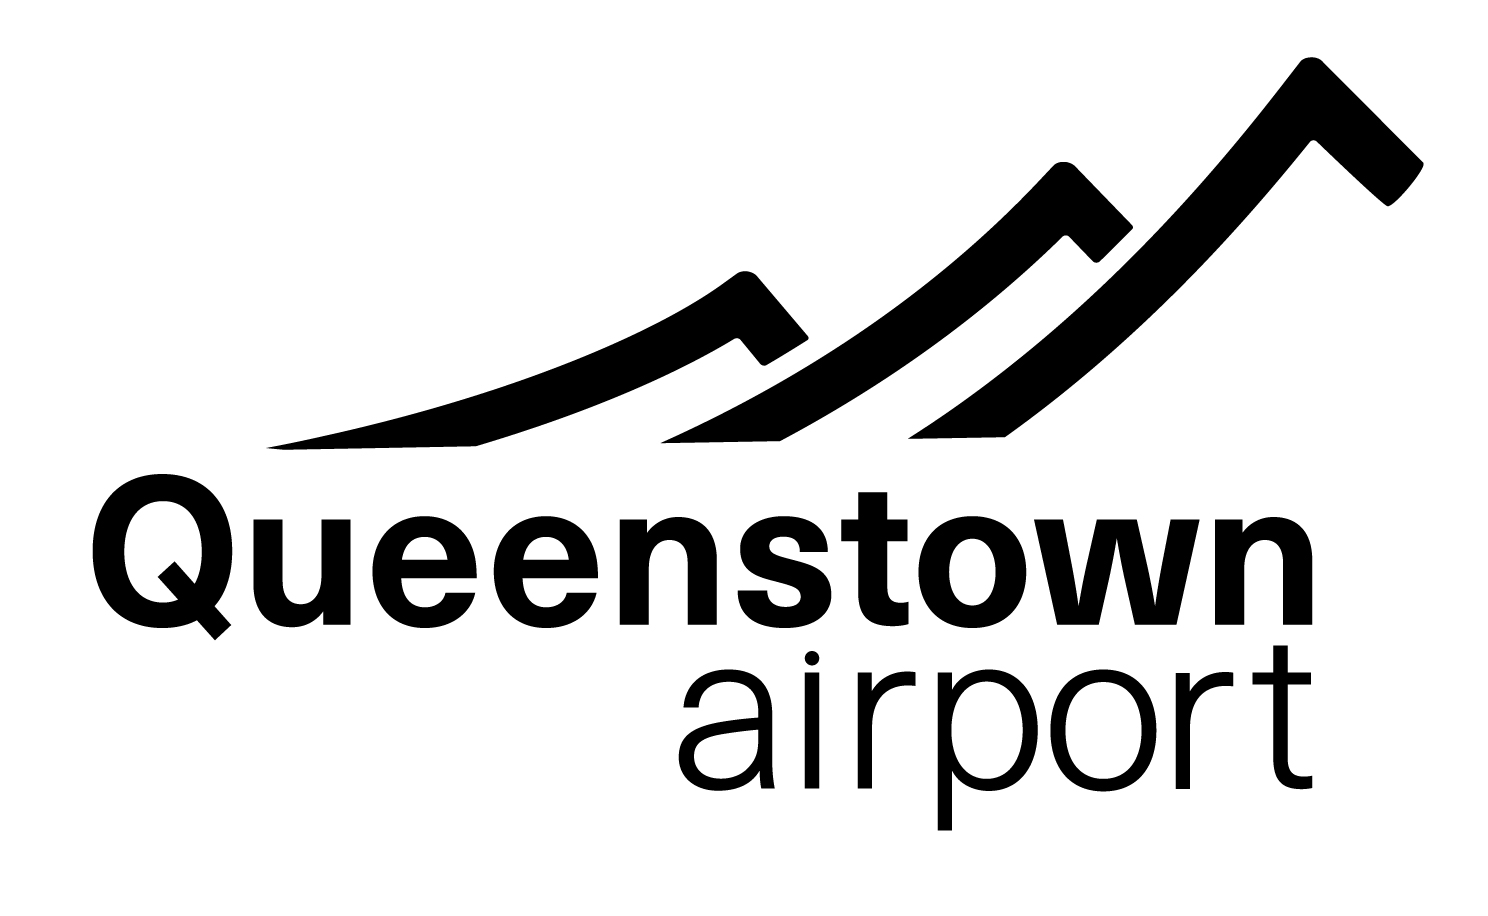 bristol-airport-logo - Airport Suppliers